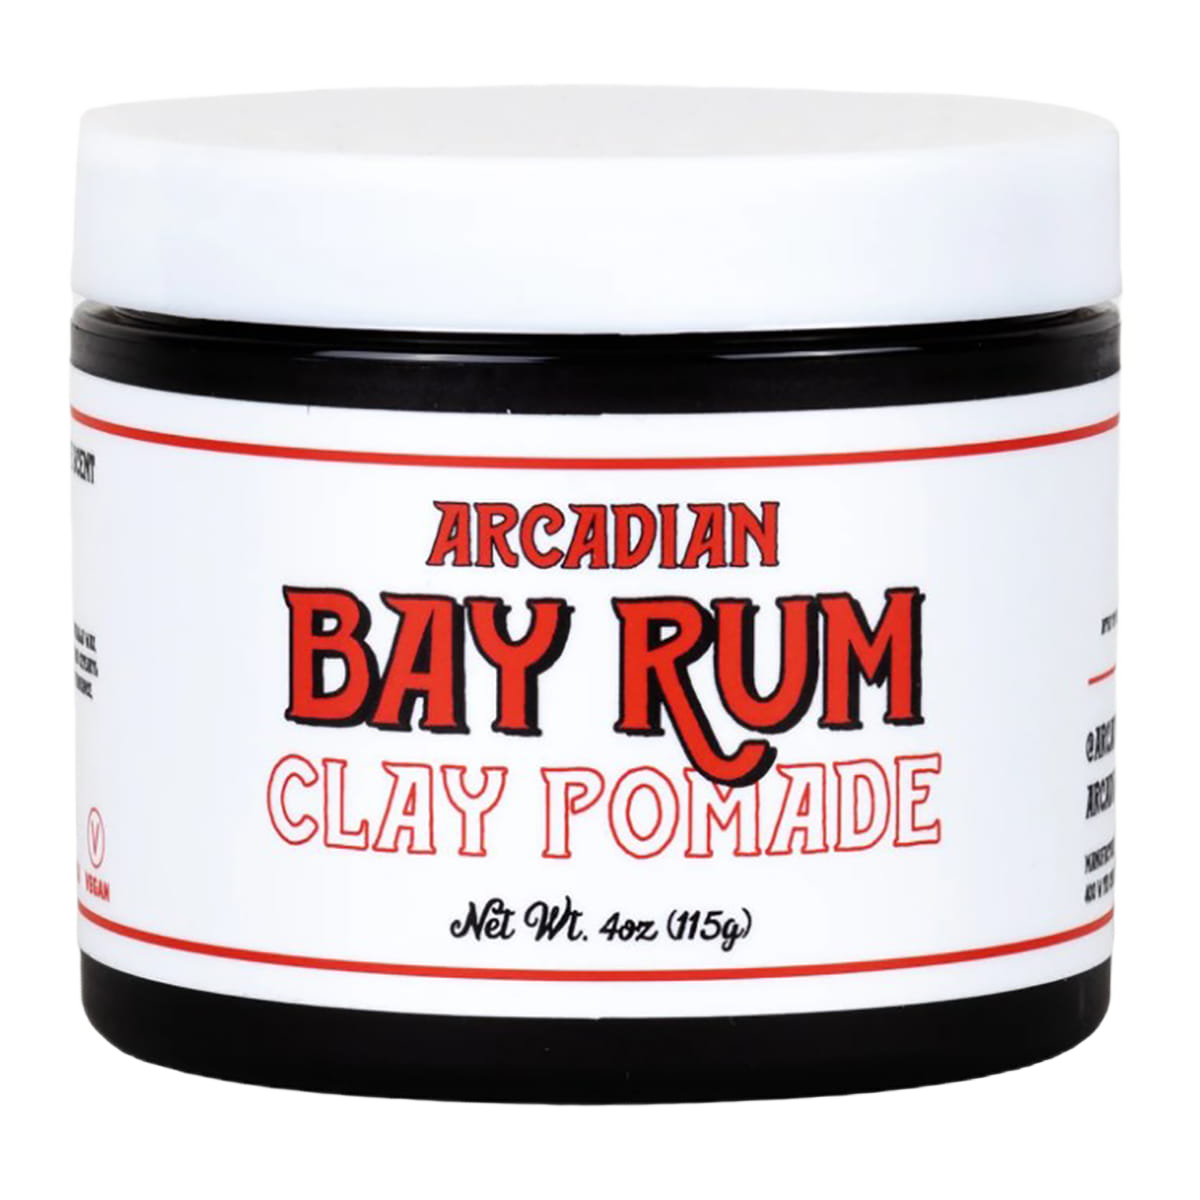 Помада для волос Arcadian Clay Pomade Bay Rum, 115 гр цена и фото